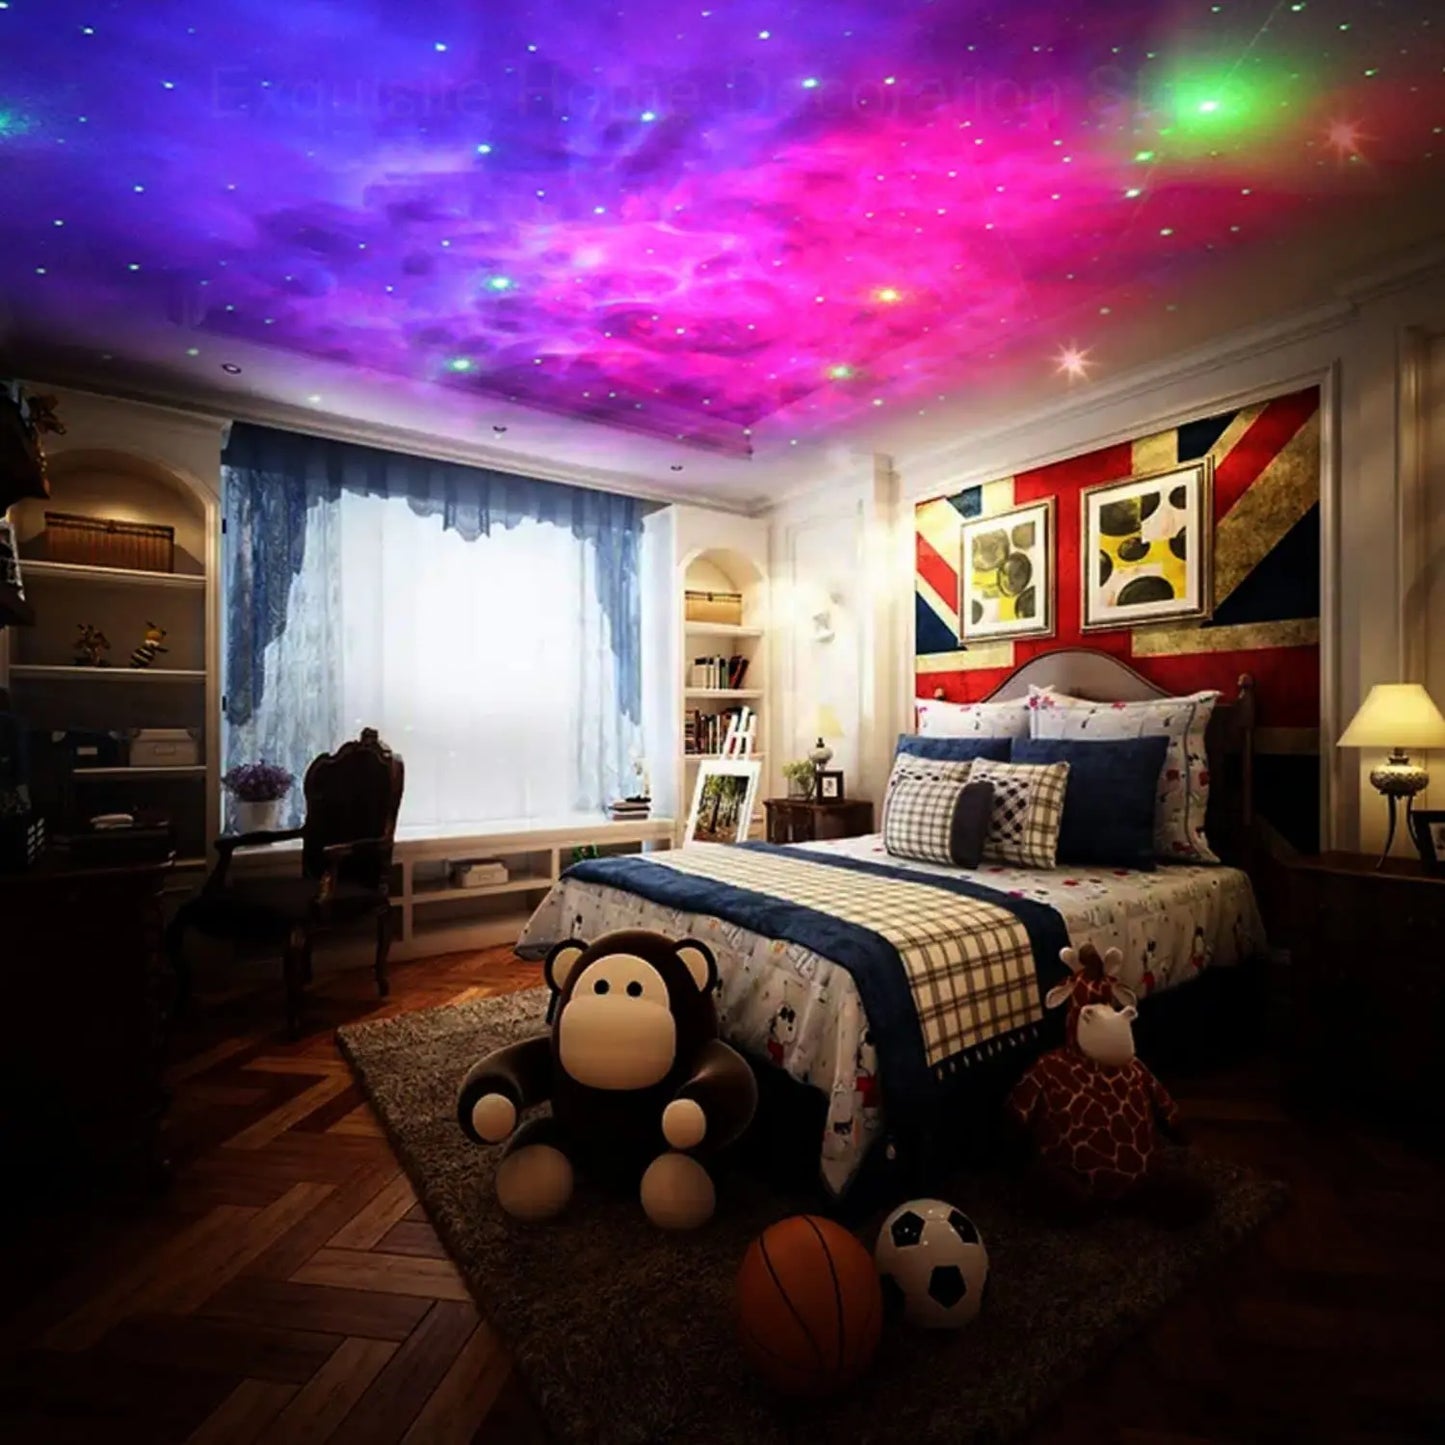 Astronaut LED Night Light Starry Sky Projector